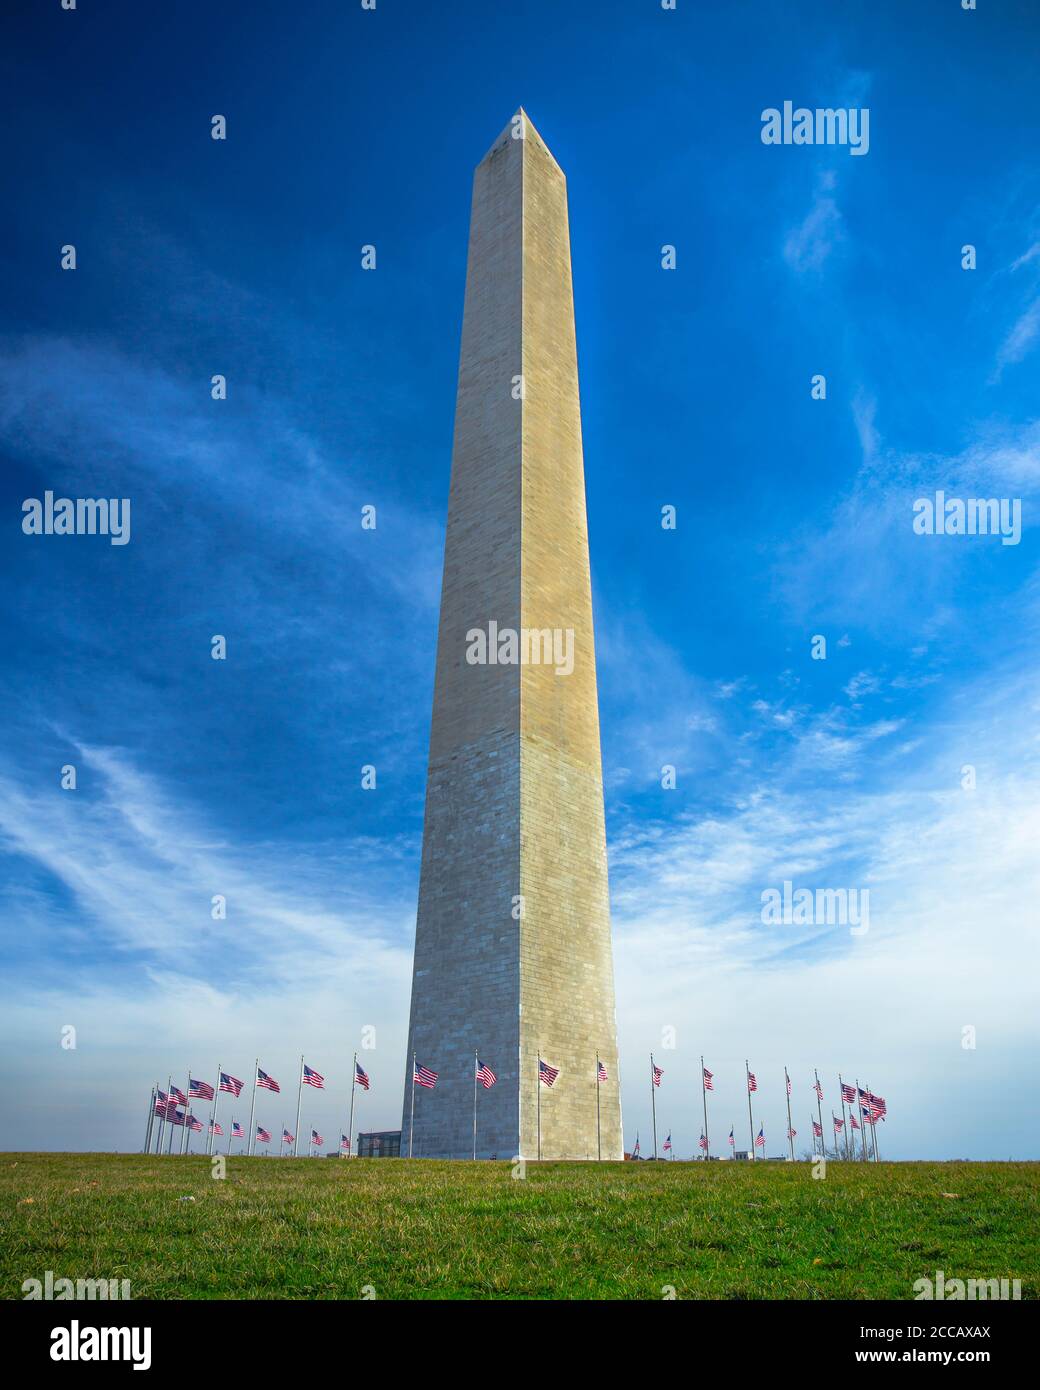 The Washington Monument on a sunny Spring day against a blue sky Stock Photo